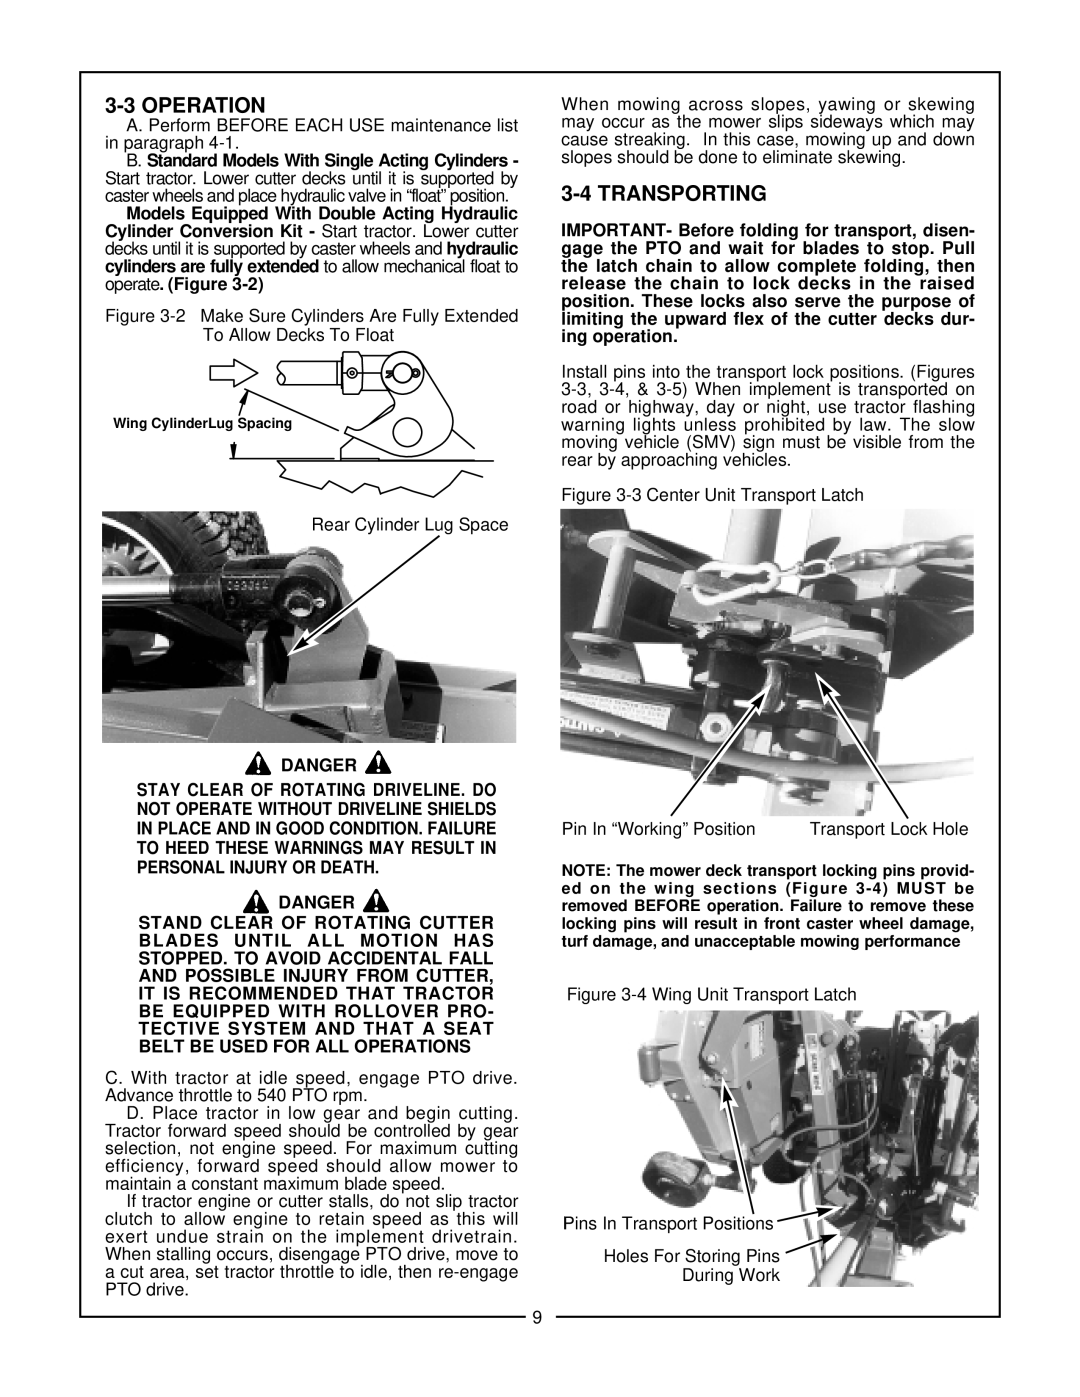 Bush Hog TD-1100 manual 3-3OPERATION, 3-4TRANSPORTING, Danger 